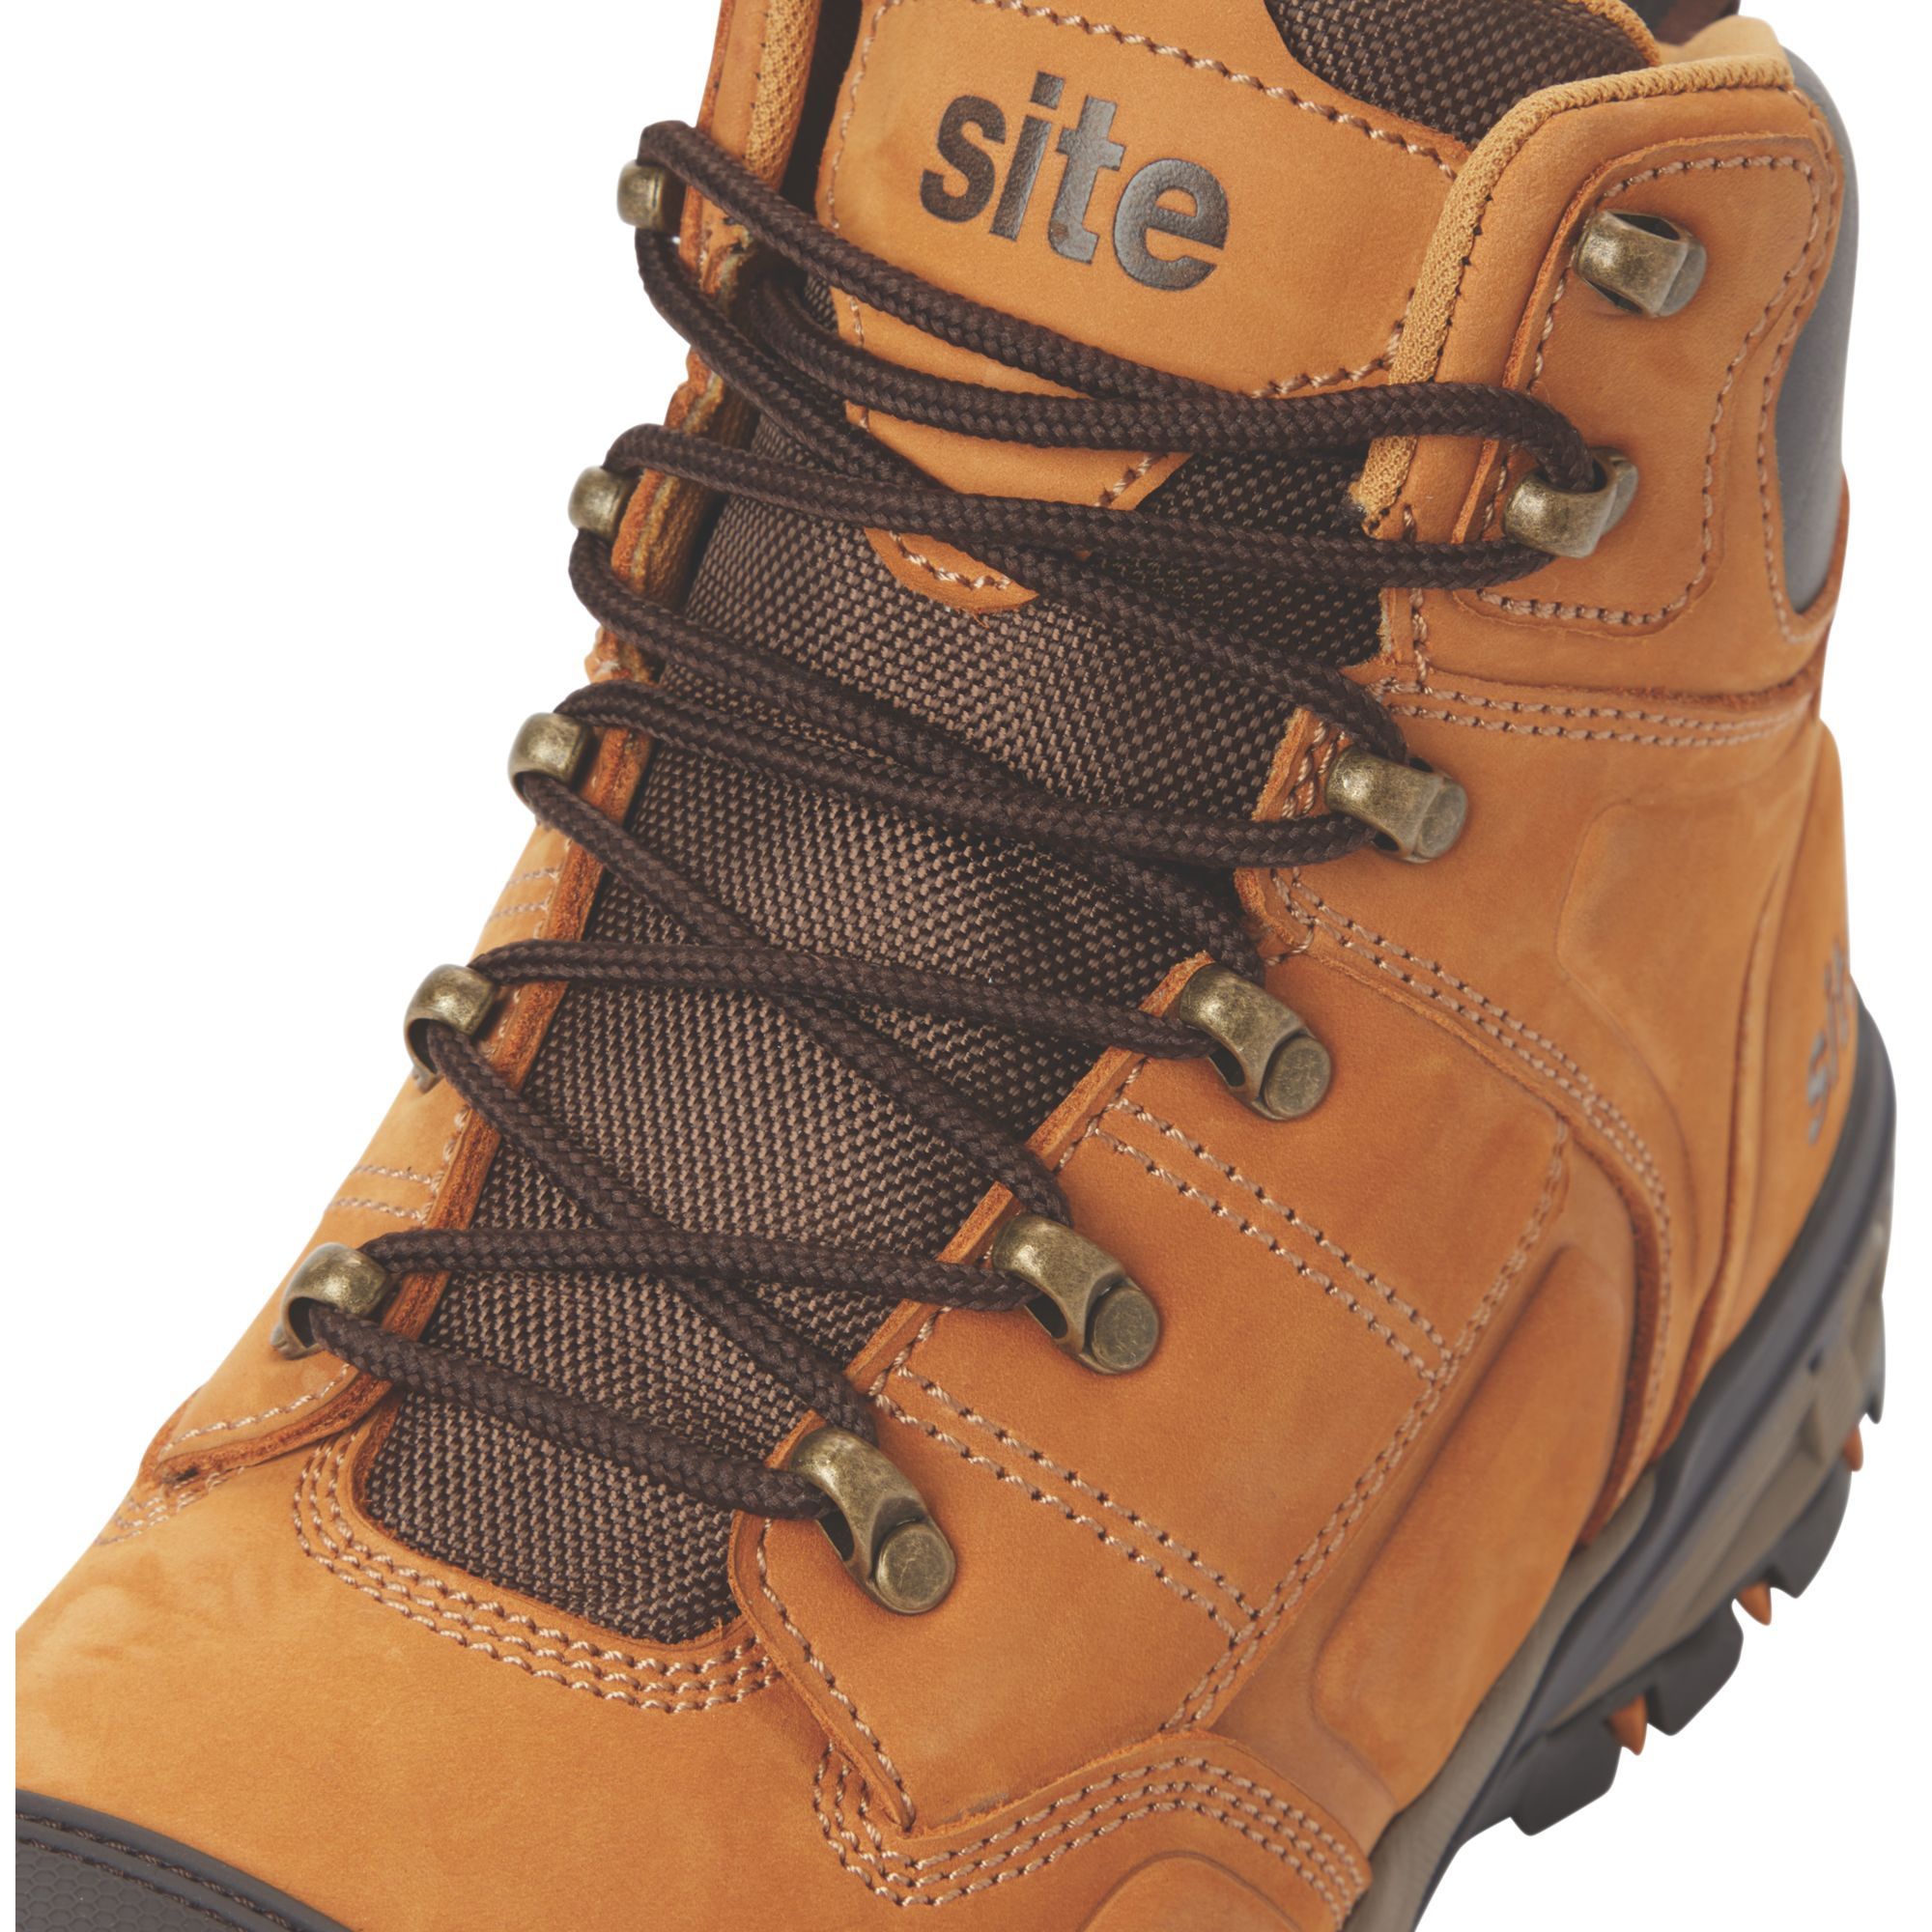 Site Tufa Men's Honey Safety boots, Size 11